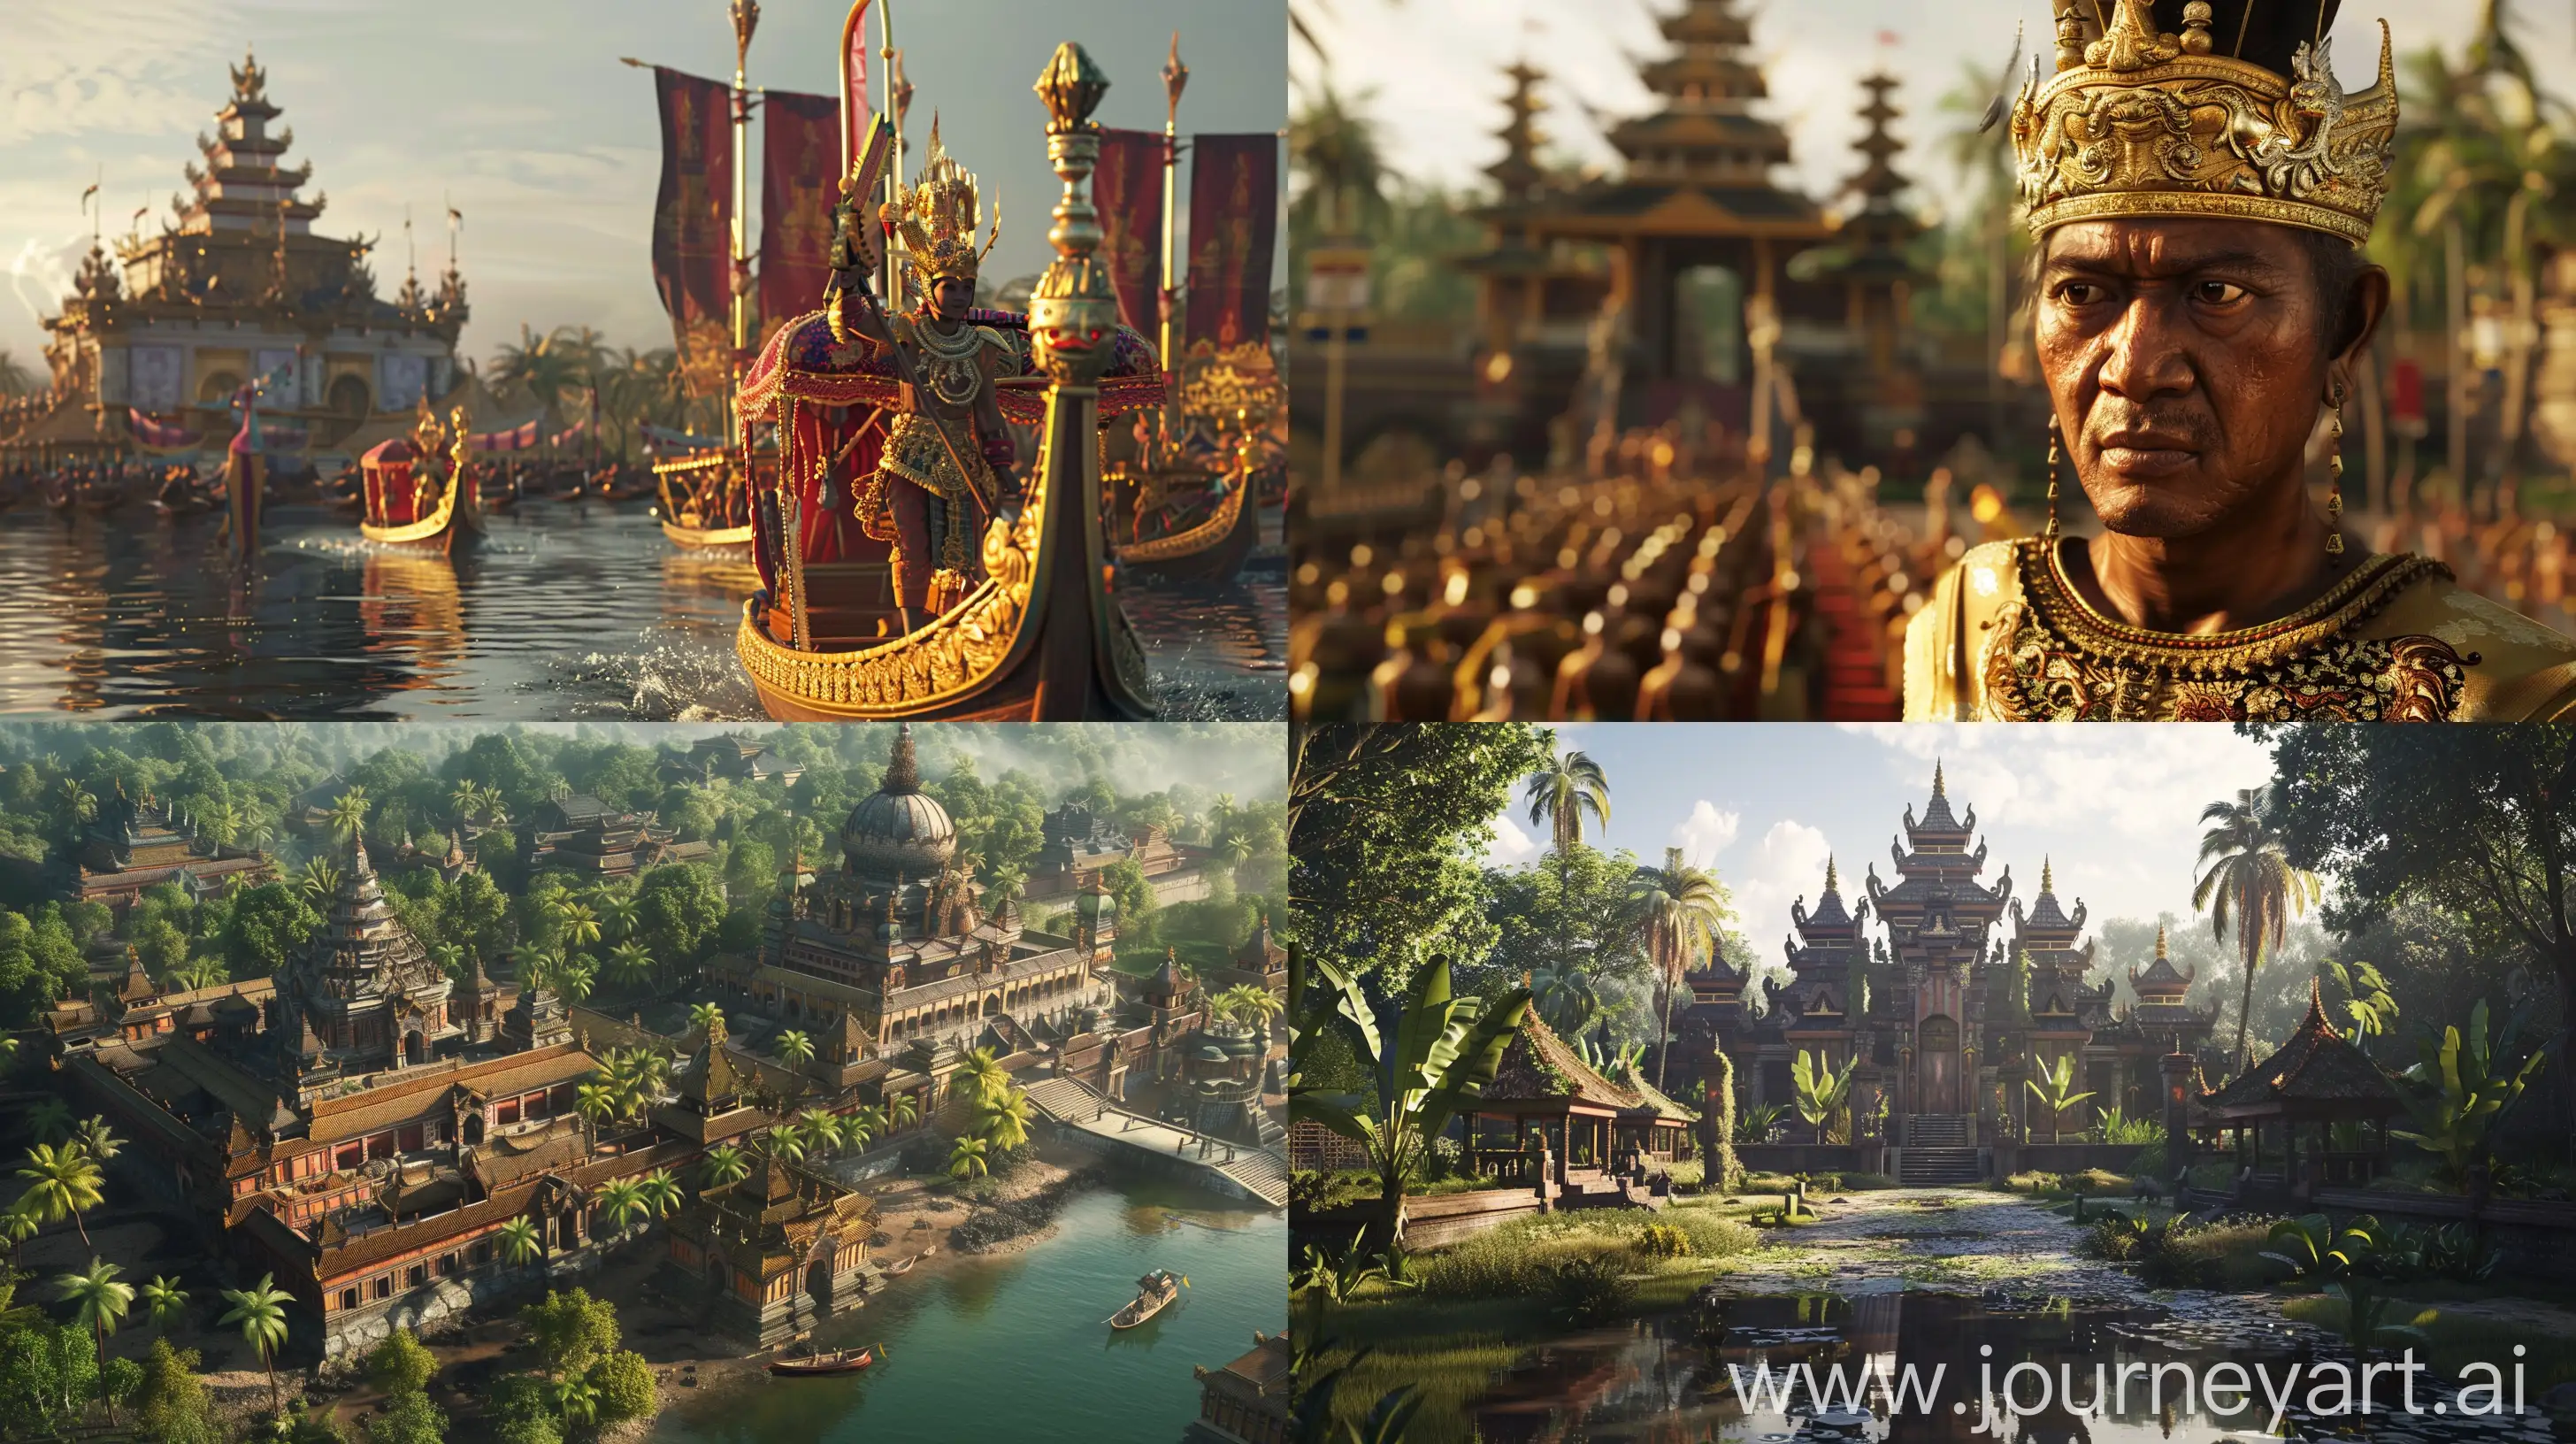 Super-Realistic-Depiction-of-Pajajaran-Sundanese-Kingdom-with-Exquisite-Detail